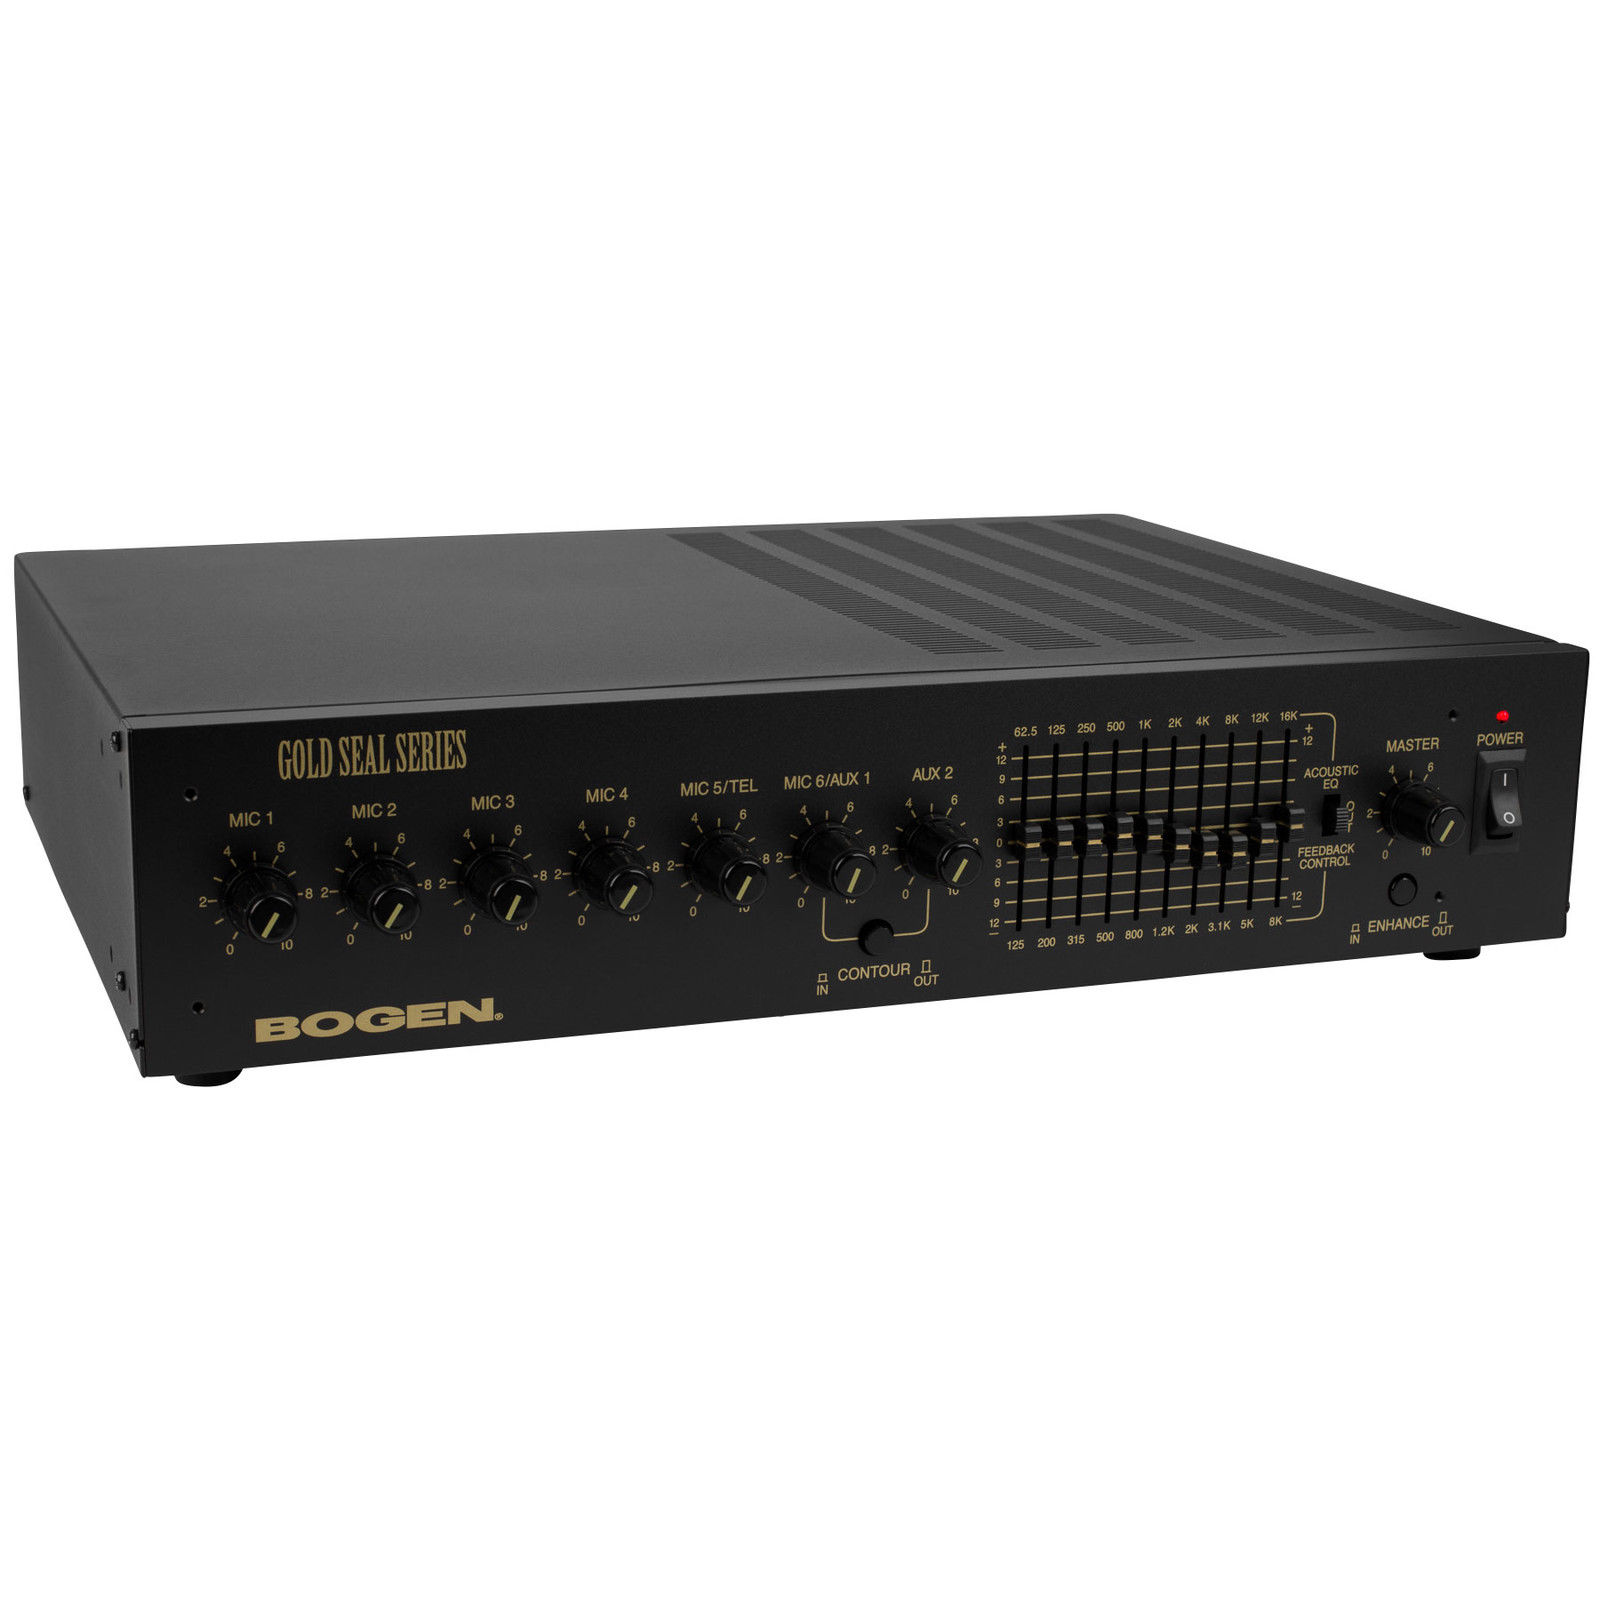 Bogen GS250D 250W Amplifier with EQ